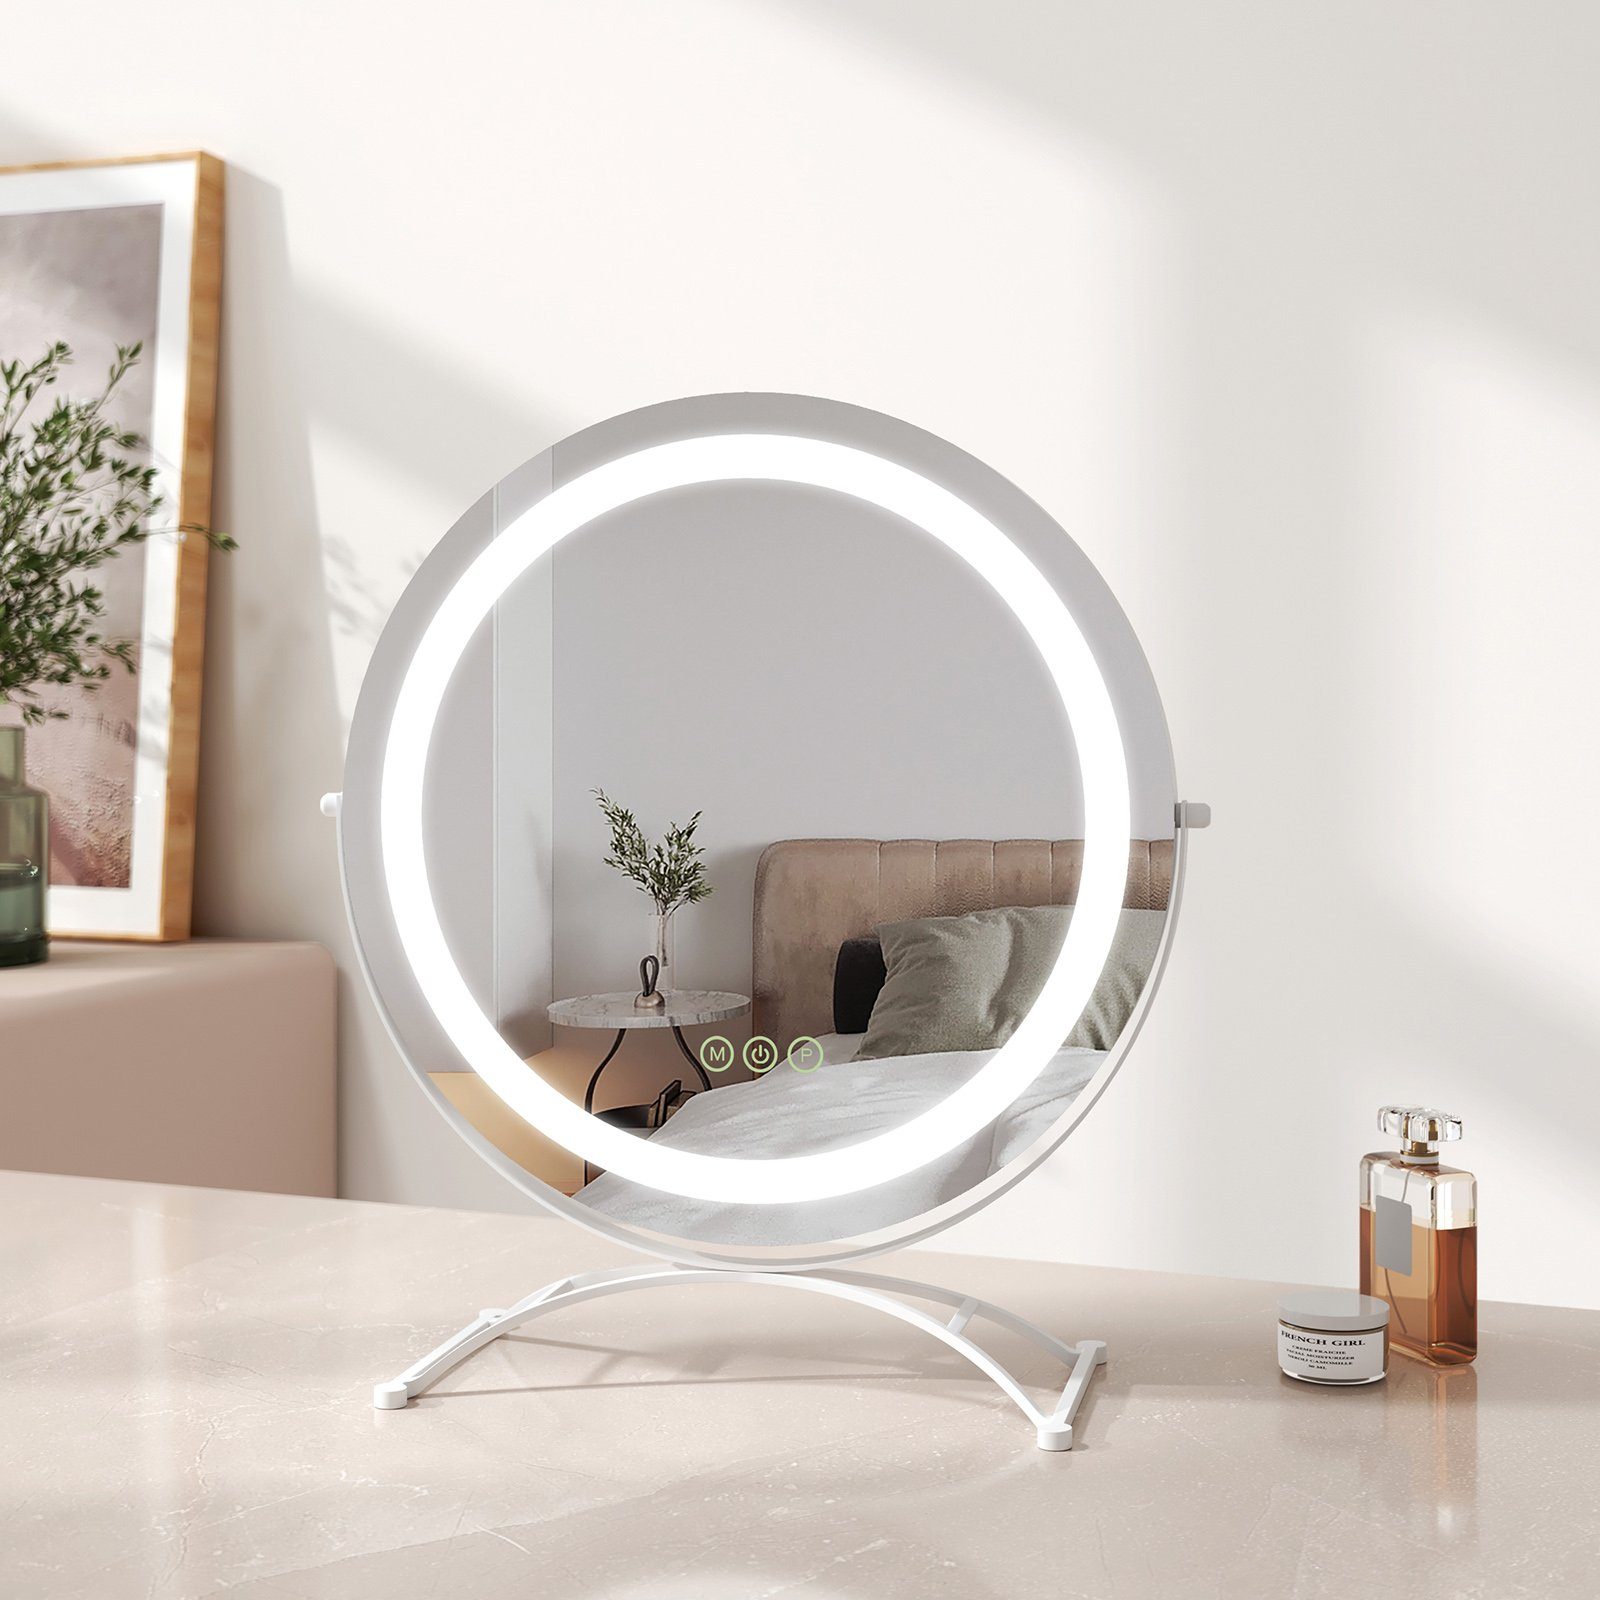 EMKE Kosmetikspiegel »Schminkspiegel Runder Kosmetikspiegel mit Beleuchtung  LED Tischspiegel«, mit Touch, 3 Lichtfarben Dimmbar, Memory-Funktion, 360°  Drehbar